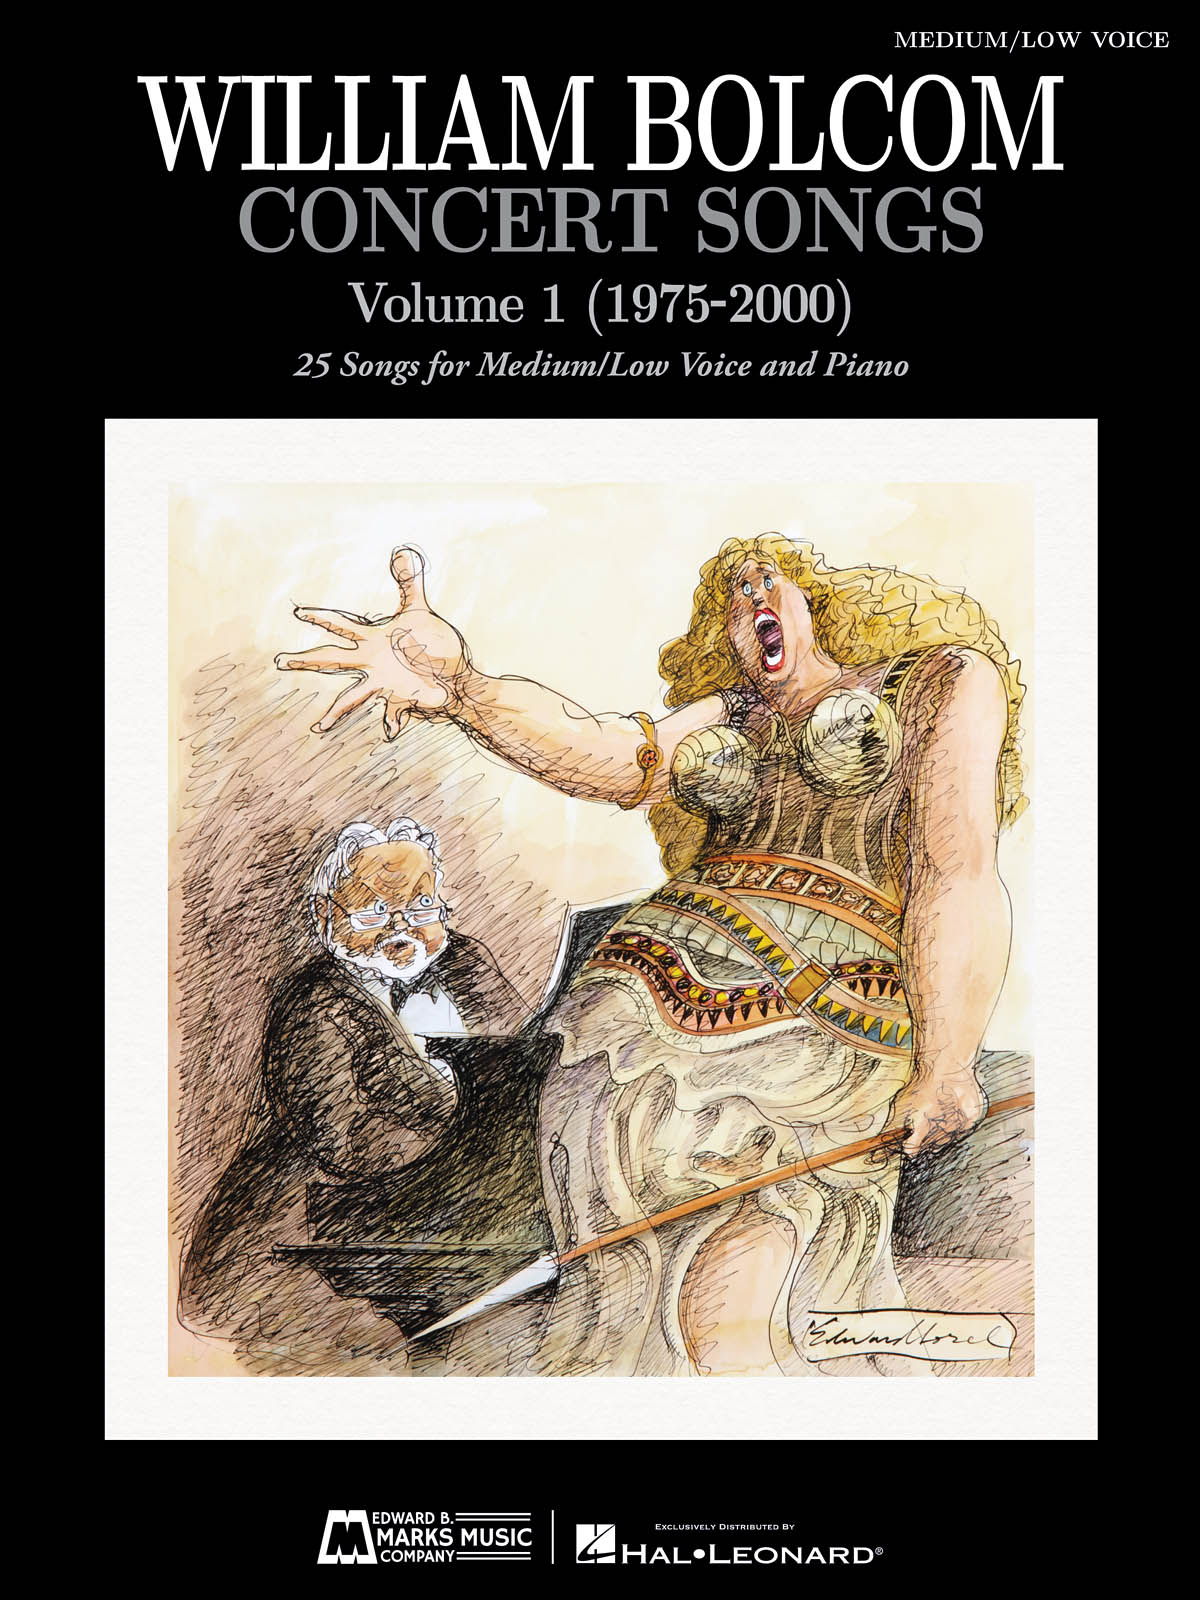 Concert Songs - Volume 1 (1975-2000) - 25 Songs for Medium/Low Voice and Piano - noty pro nízký hlas a klavír